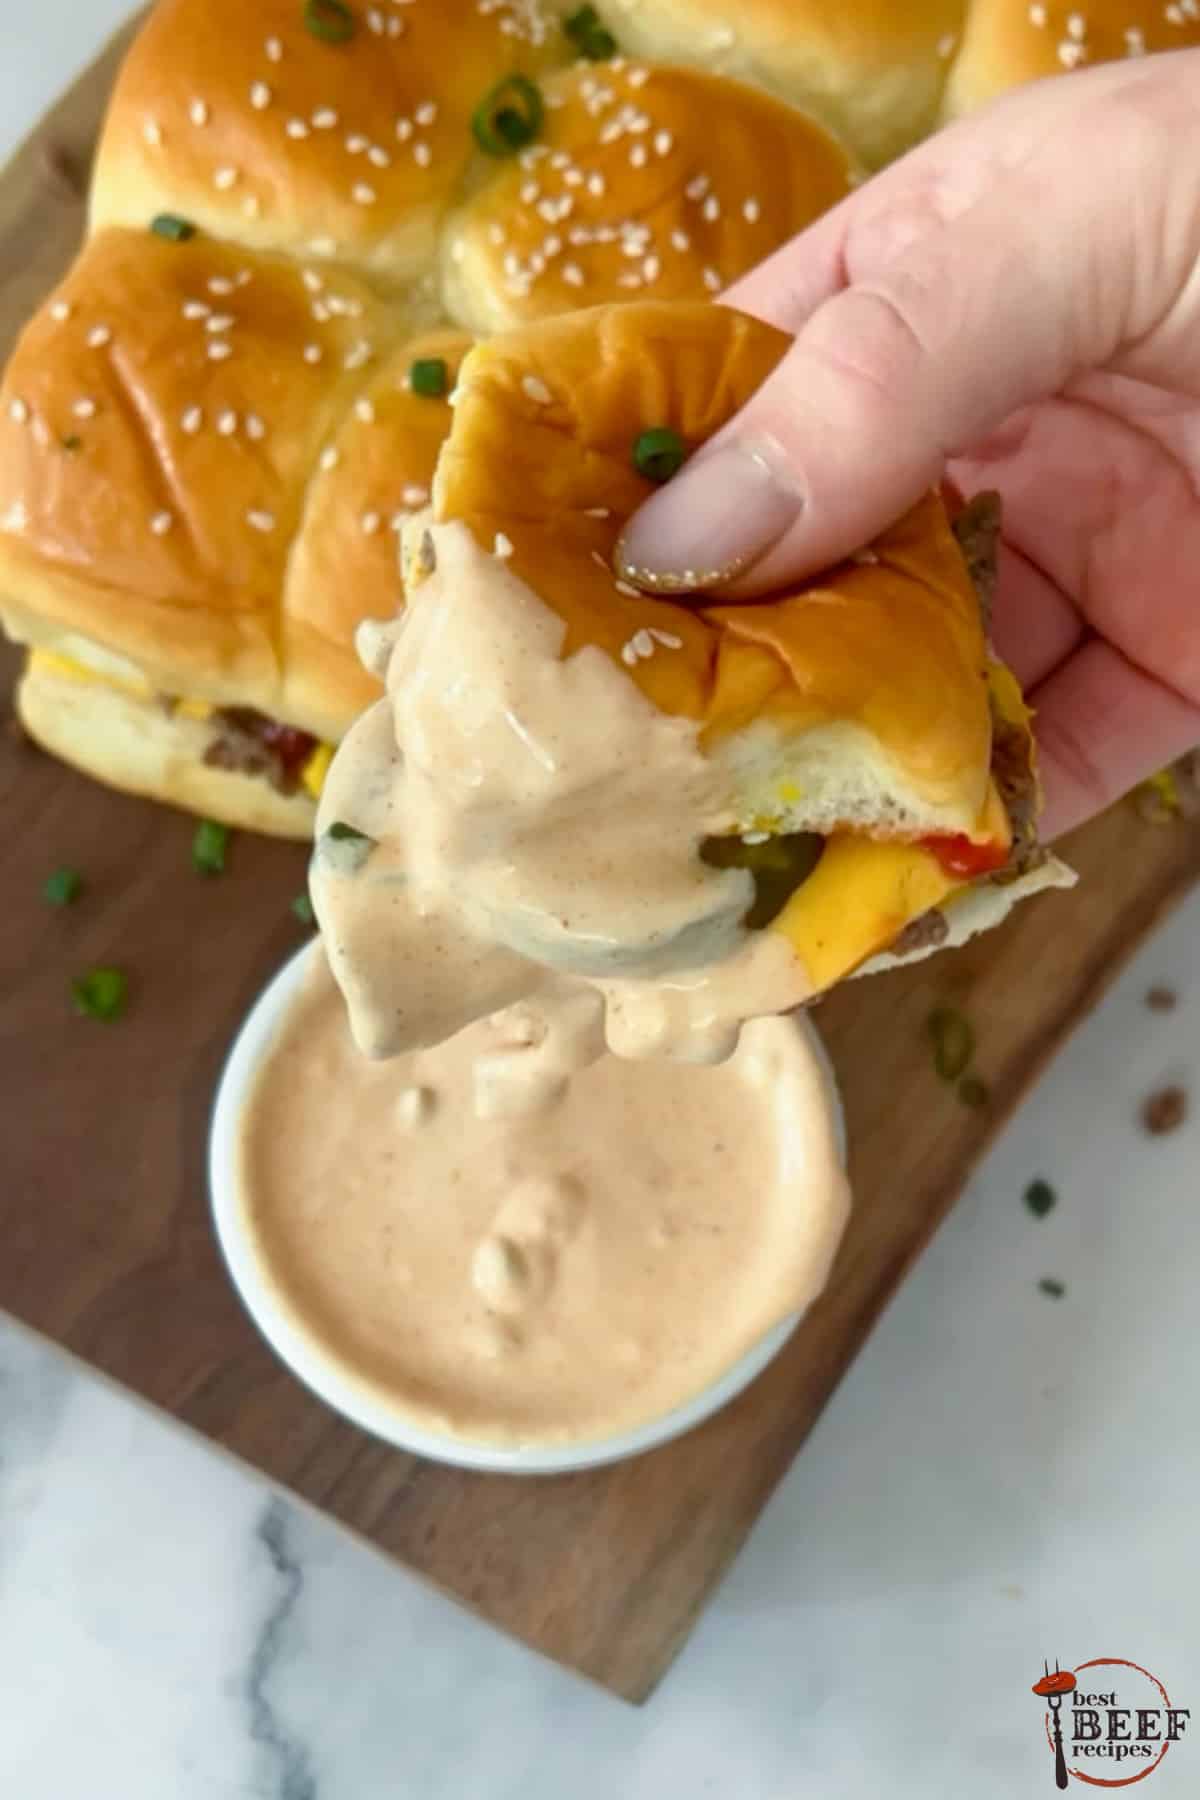 cheeseburger dipping into burger sauce